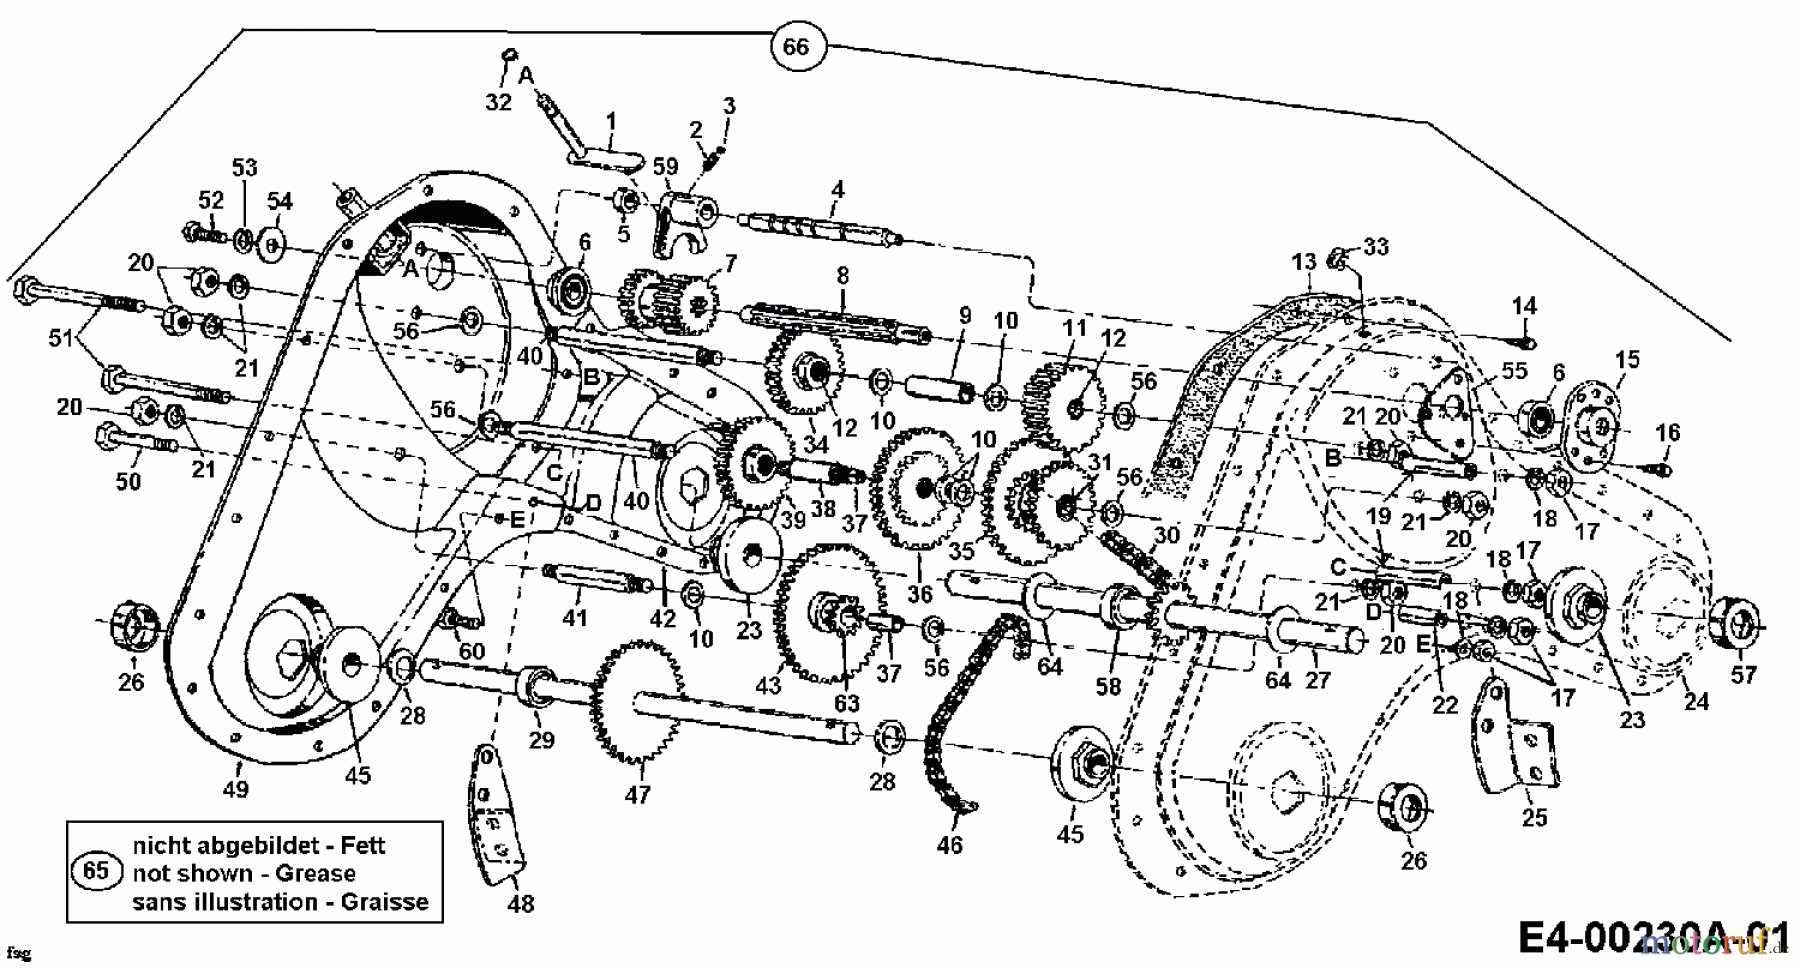  Yard-Man Motorhacken DT 550 21A-448A643  (1998) Getriebe